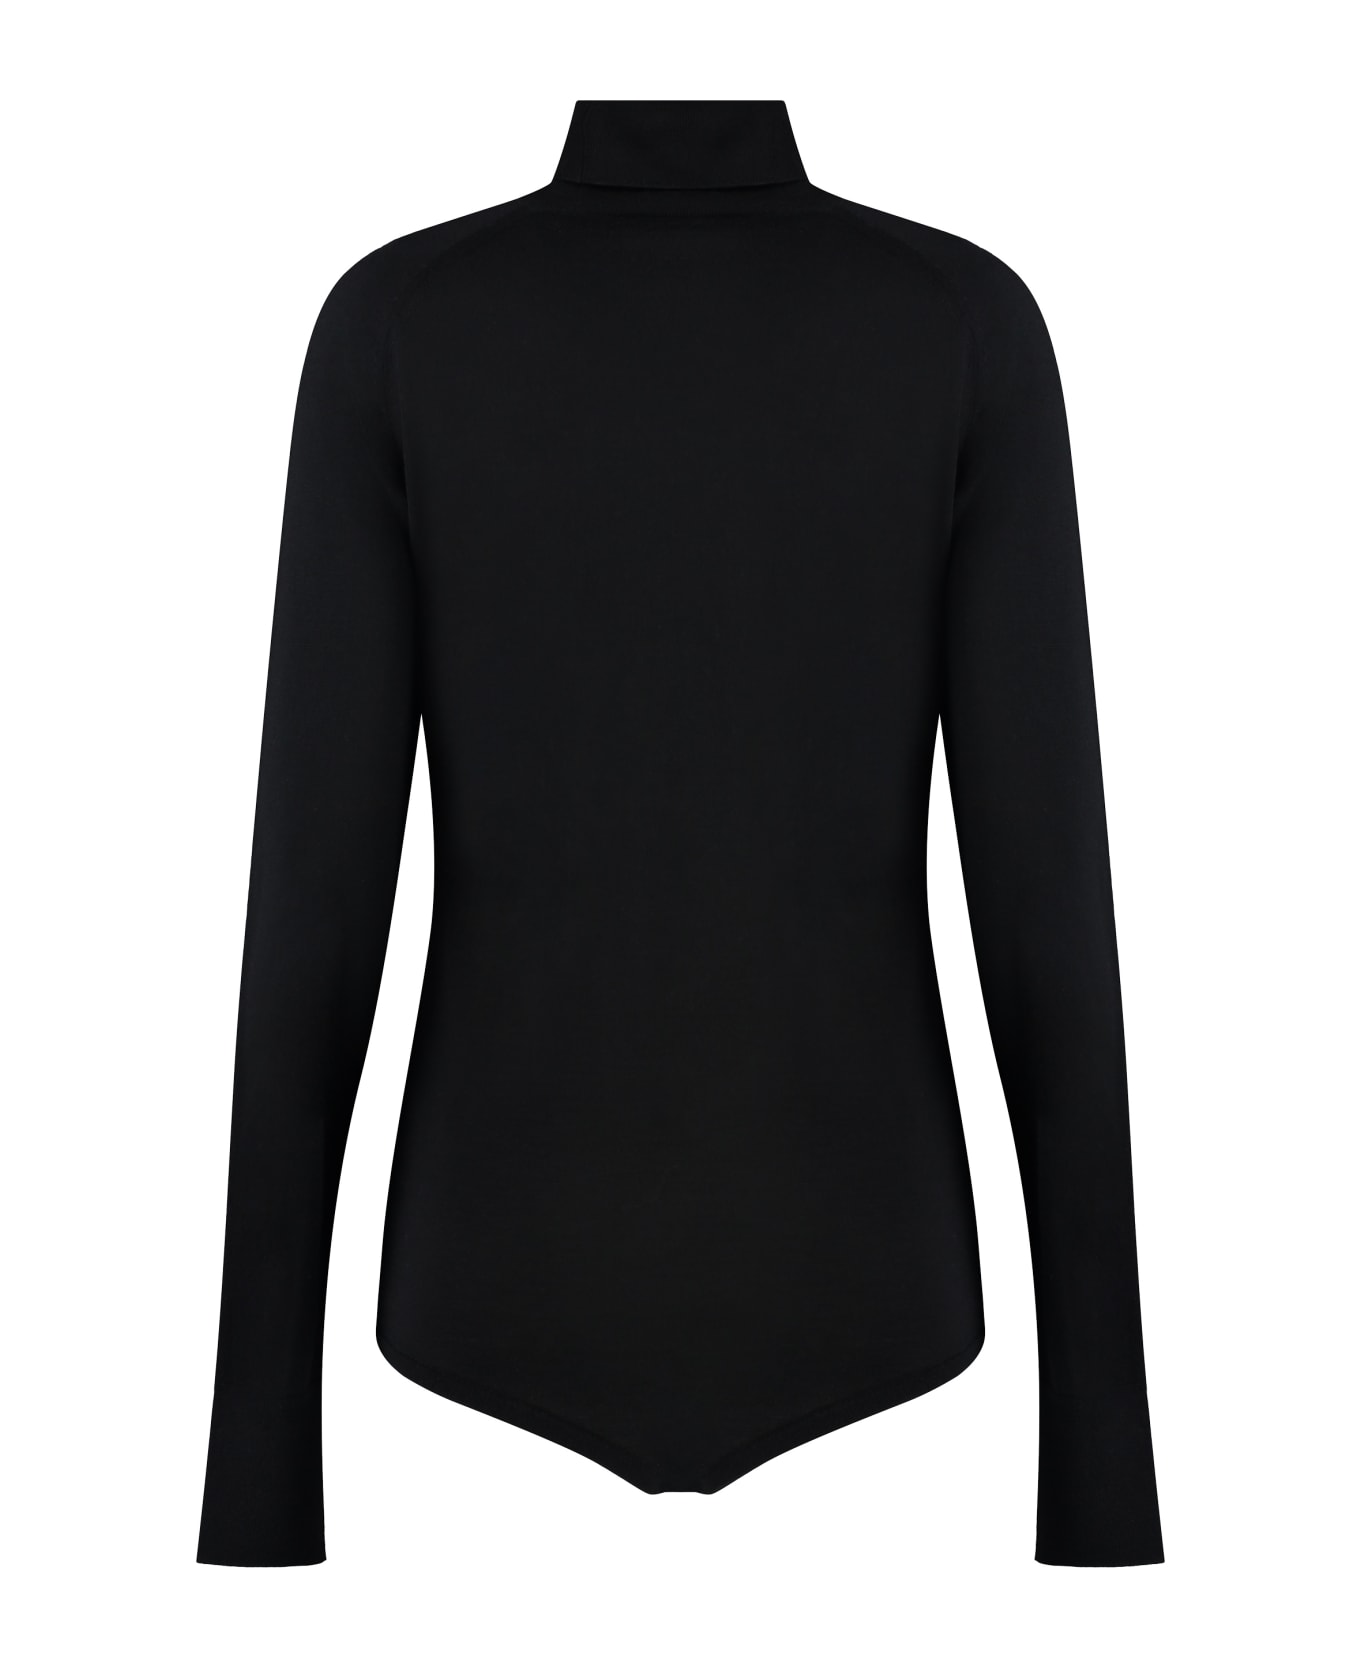 Victoria Beckham Knit Bodysuit - black